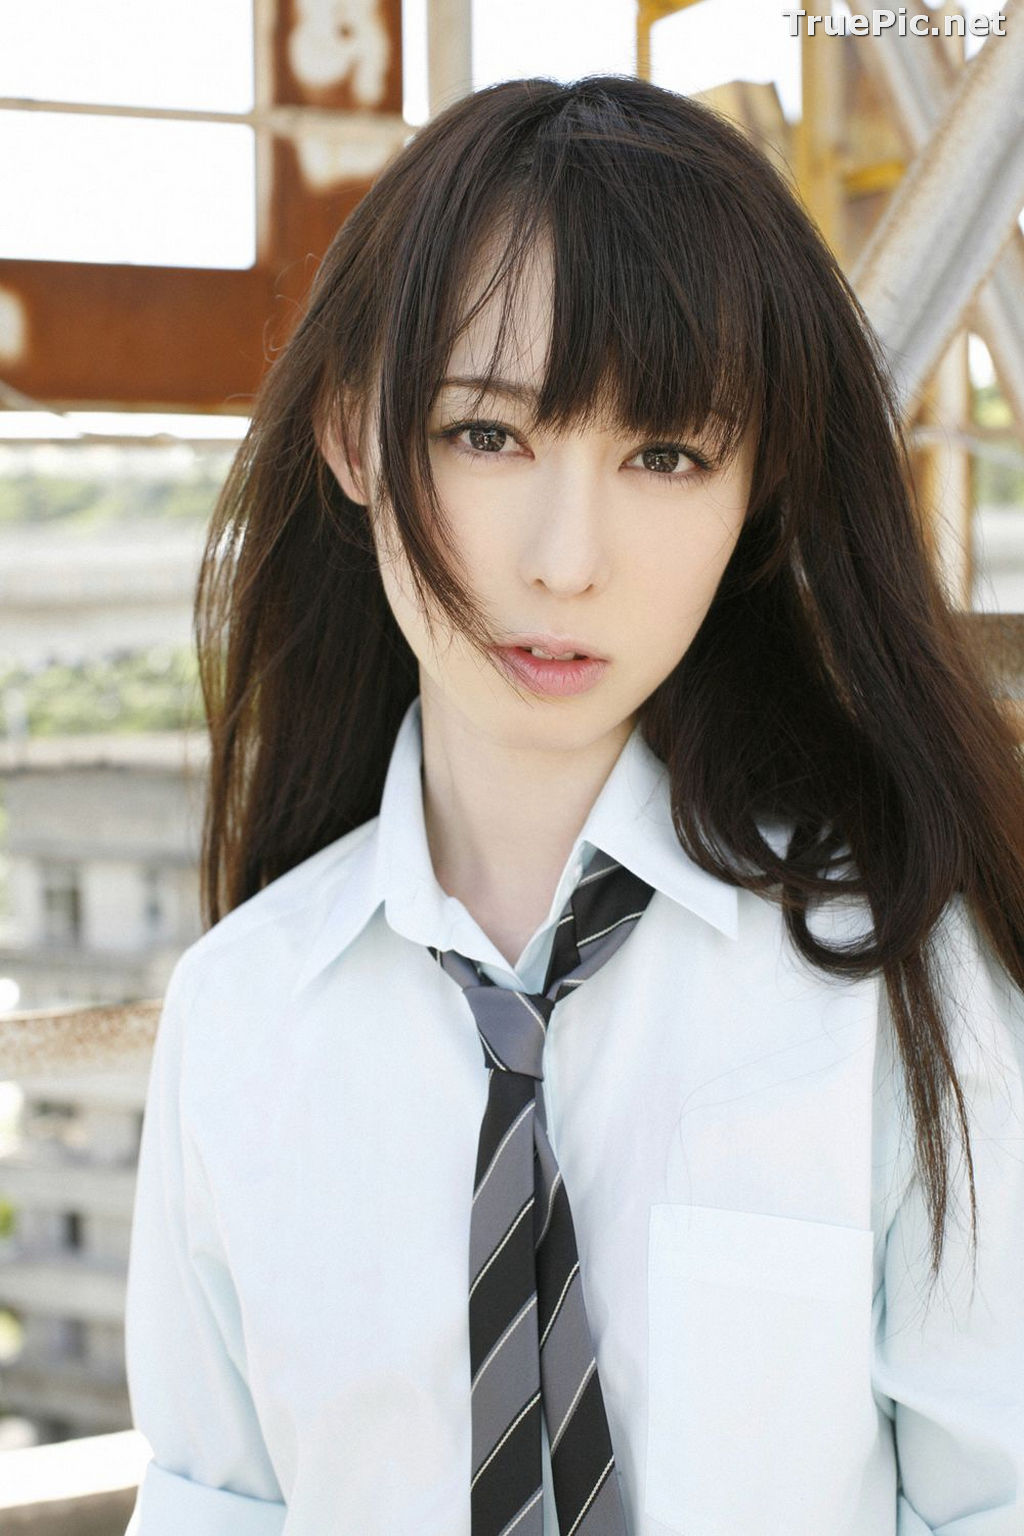 Image [YS Web] Vol.345 - Japanese Actress and Gravure Idol - Akiyama Rina - TruePic.net - Picture-4